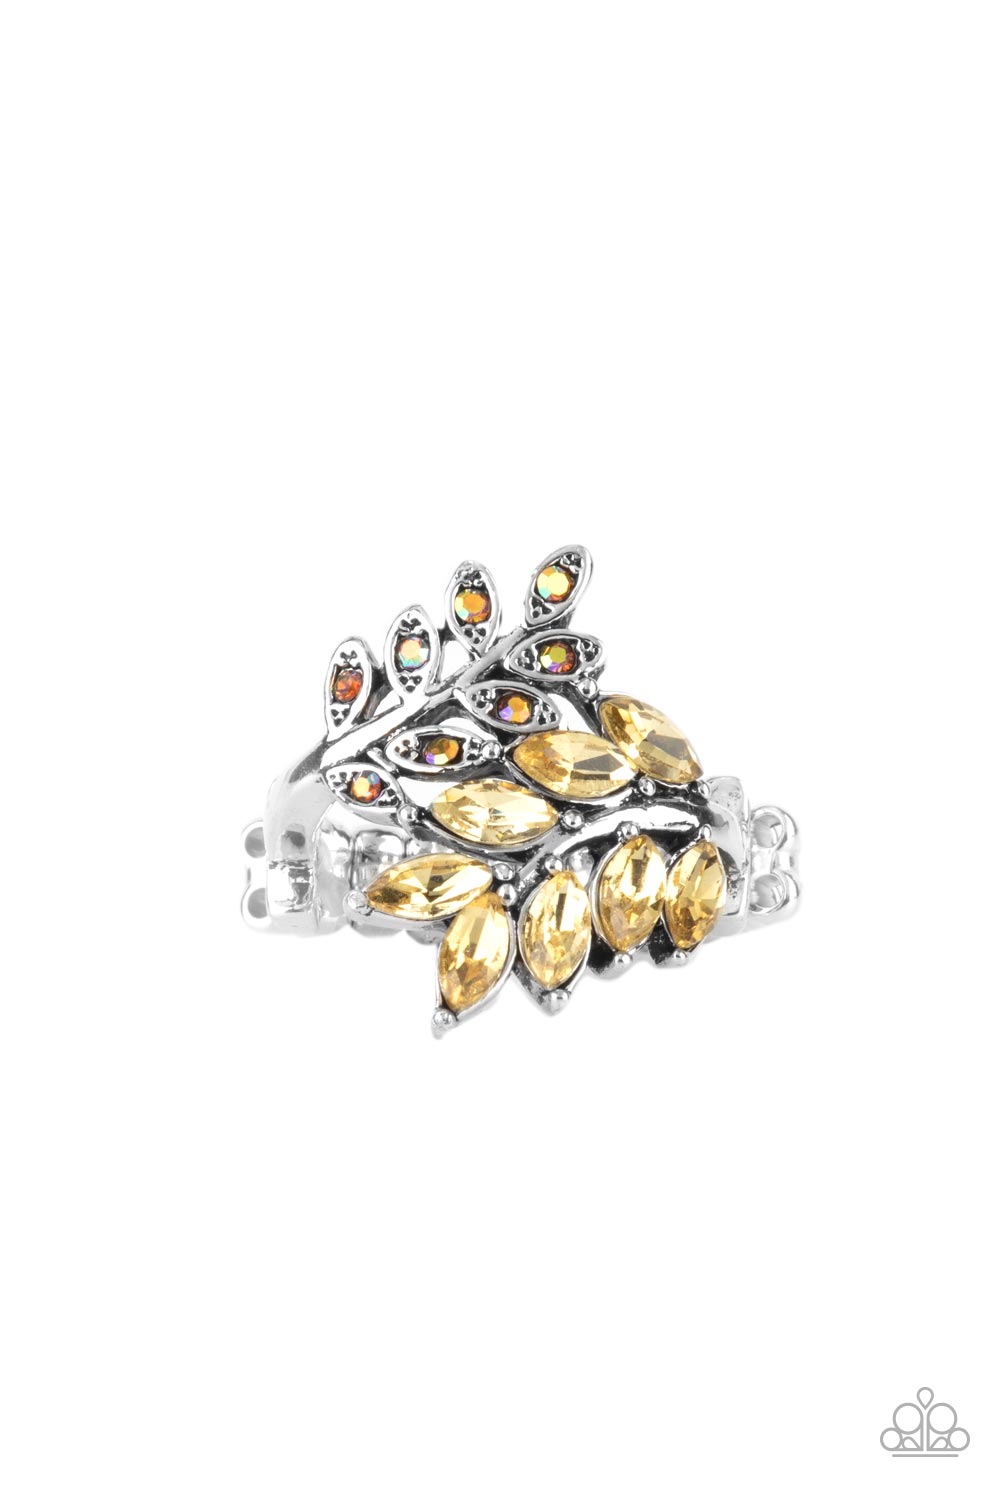 Glowing Gardenista Yellow Rhinestone Ring - Paparazzi Accessories- lightbox - CarasShop.com - $5 Jewelry by Cara Jewels